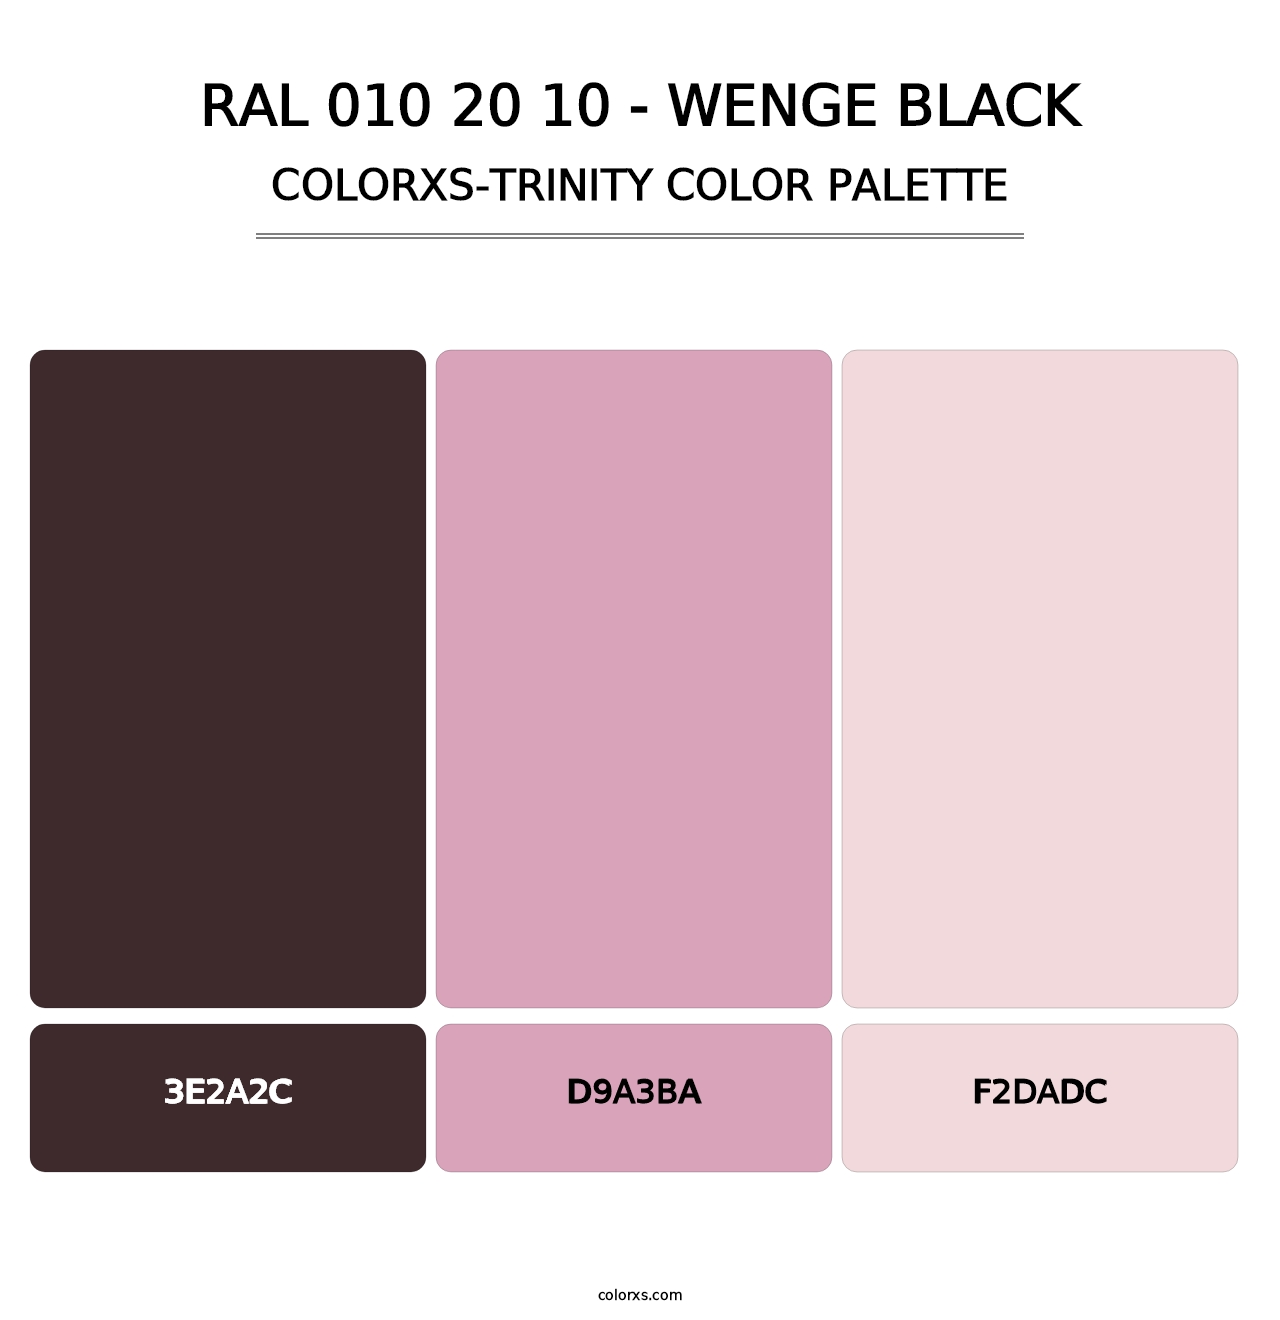 RAL 010 20 10 - Wenge Black - Colorxs Trinity Palette